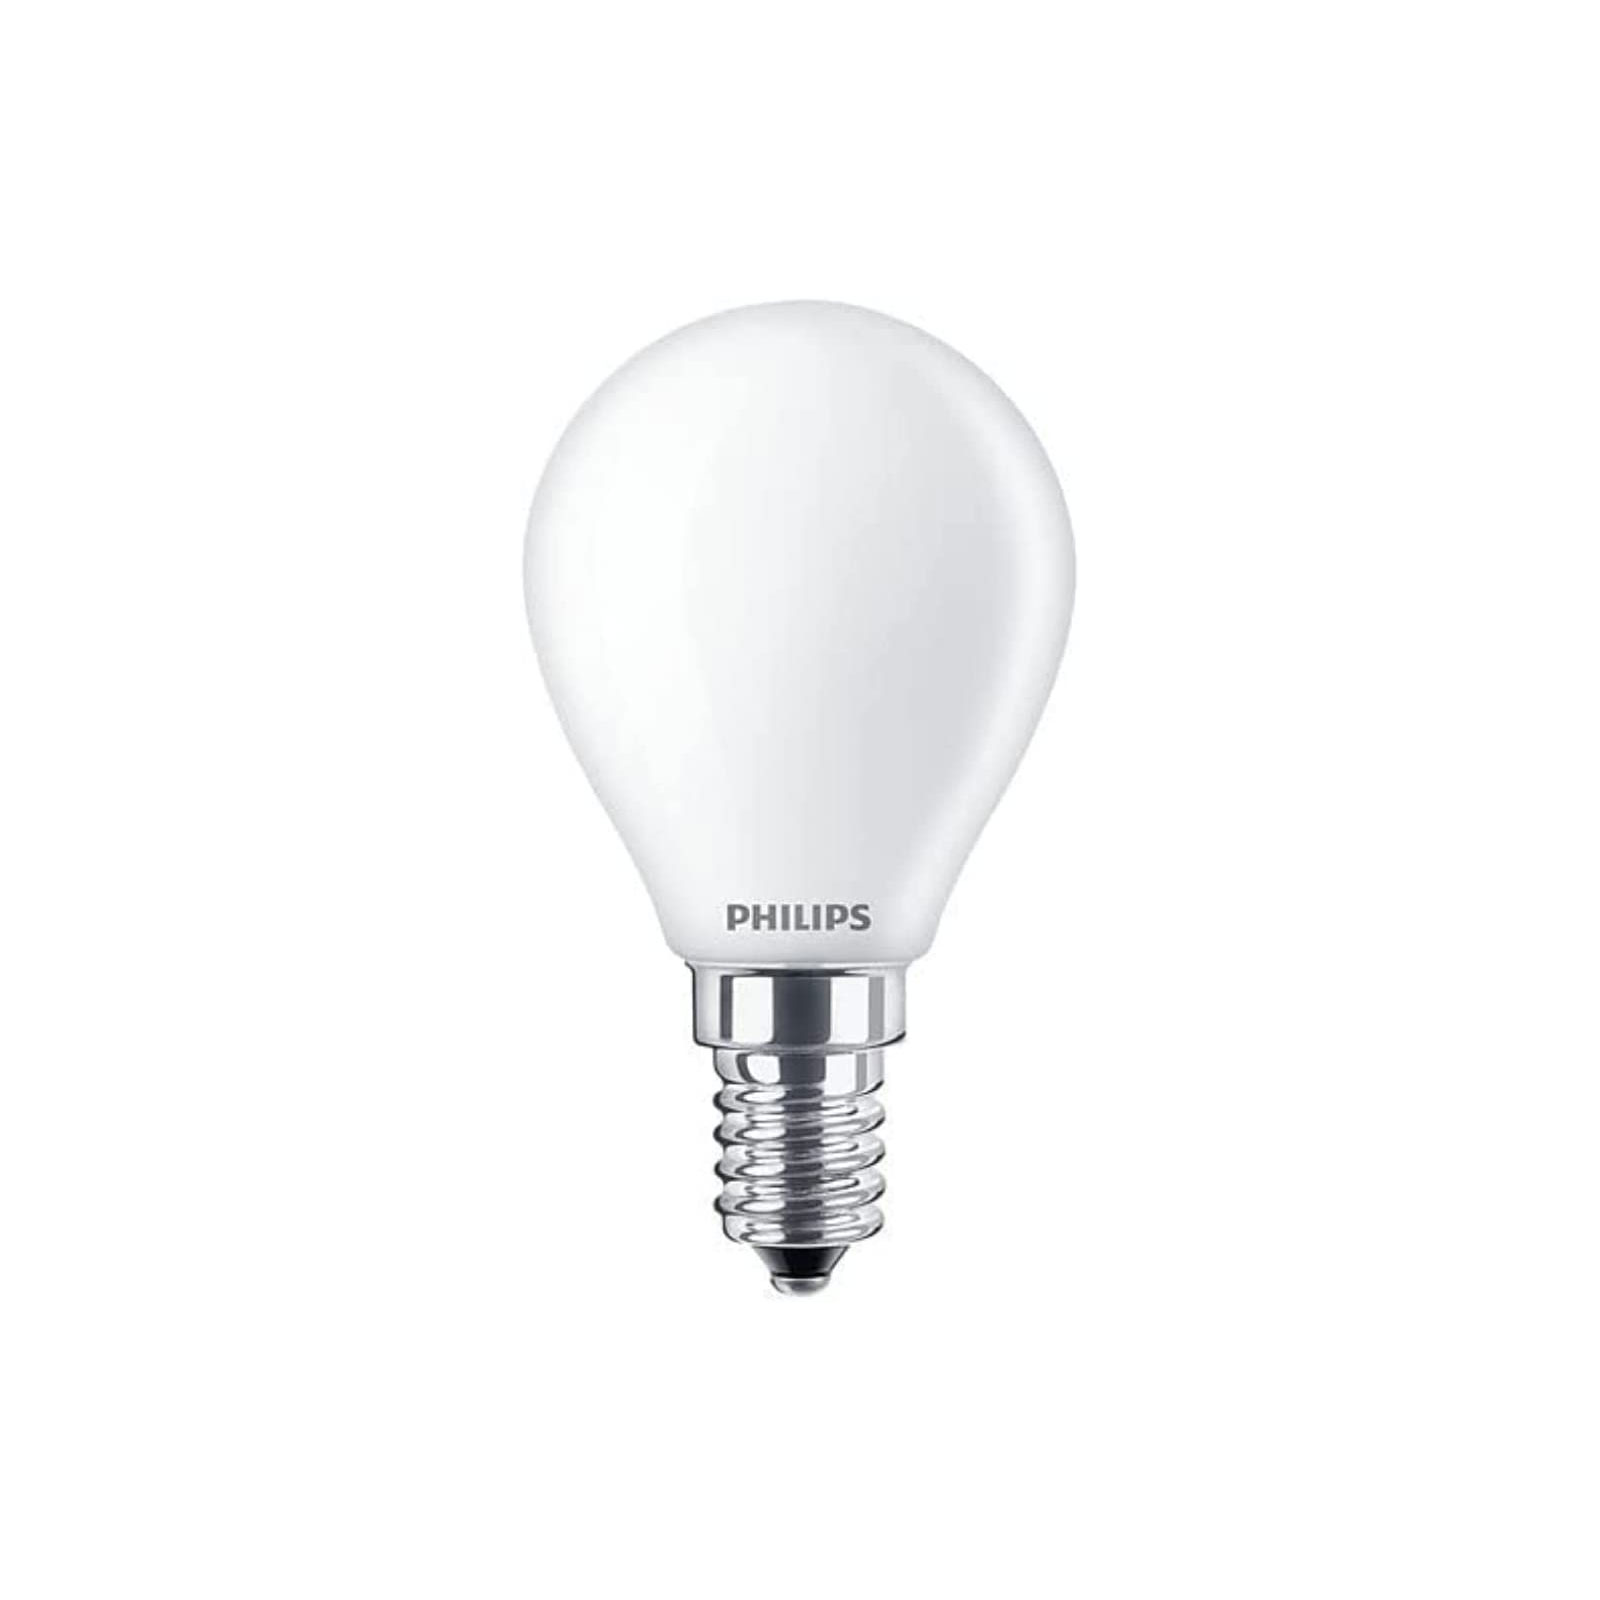 Philips LED E14 Lampe, 25 W, Tropfenform, matt, warmweiß